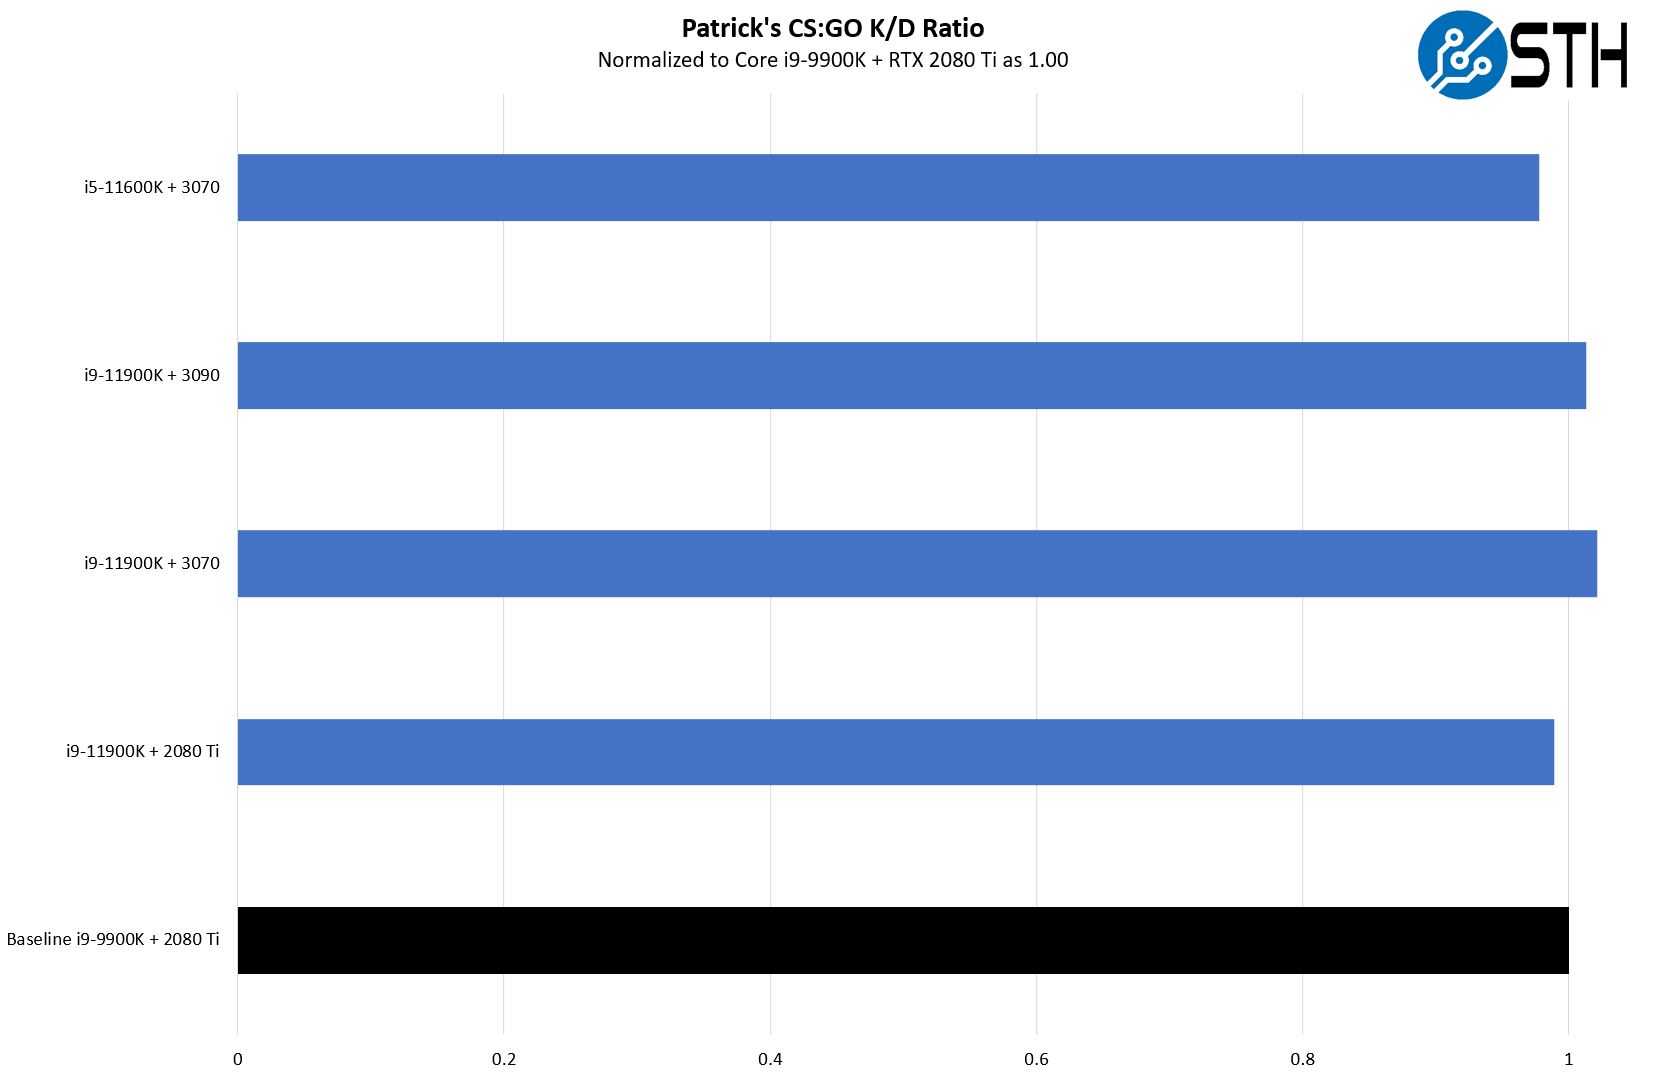 Intel Core I9 11900K Patrick Normalized CSGO KD